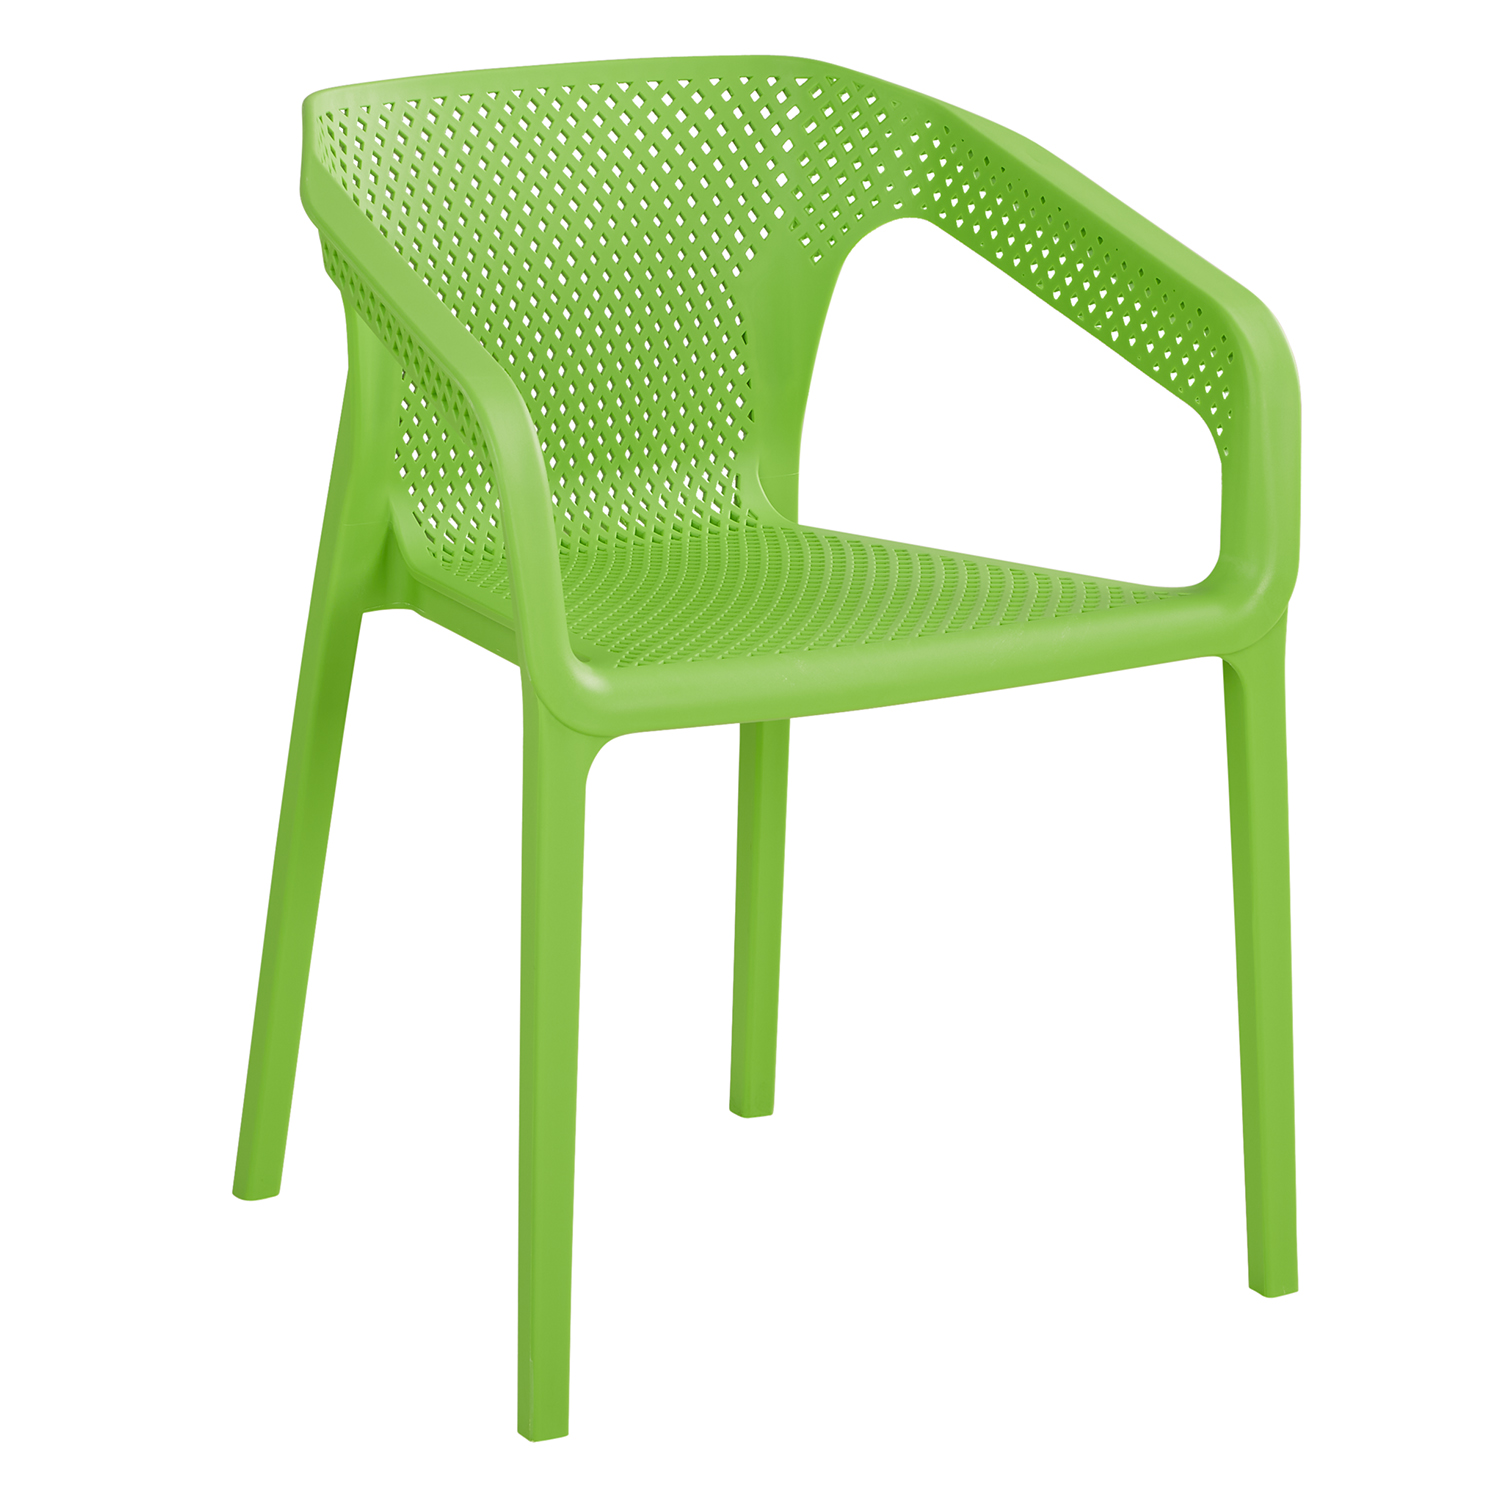 Gartenstuhl mit Armlehnen 6er Set Gartensessel Grün Stühle Kunststoff Stapelstühle Balkonstuhl Outdoor-Stuhl